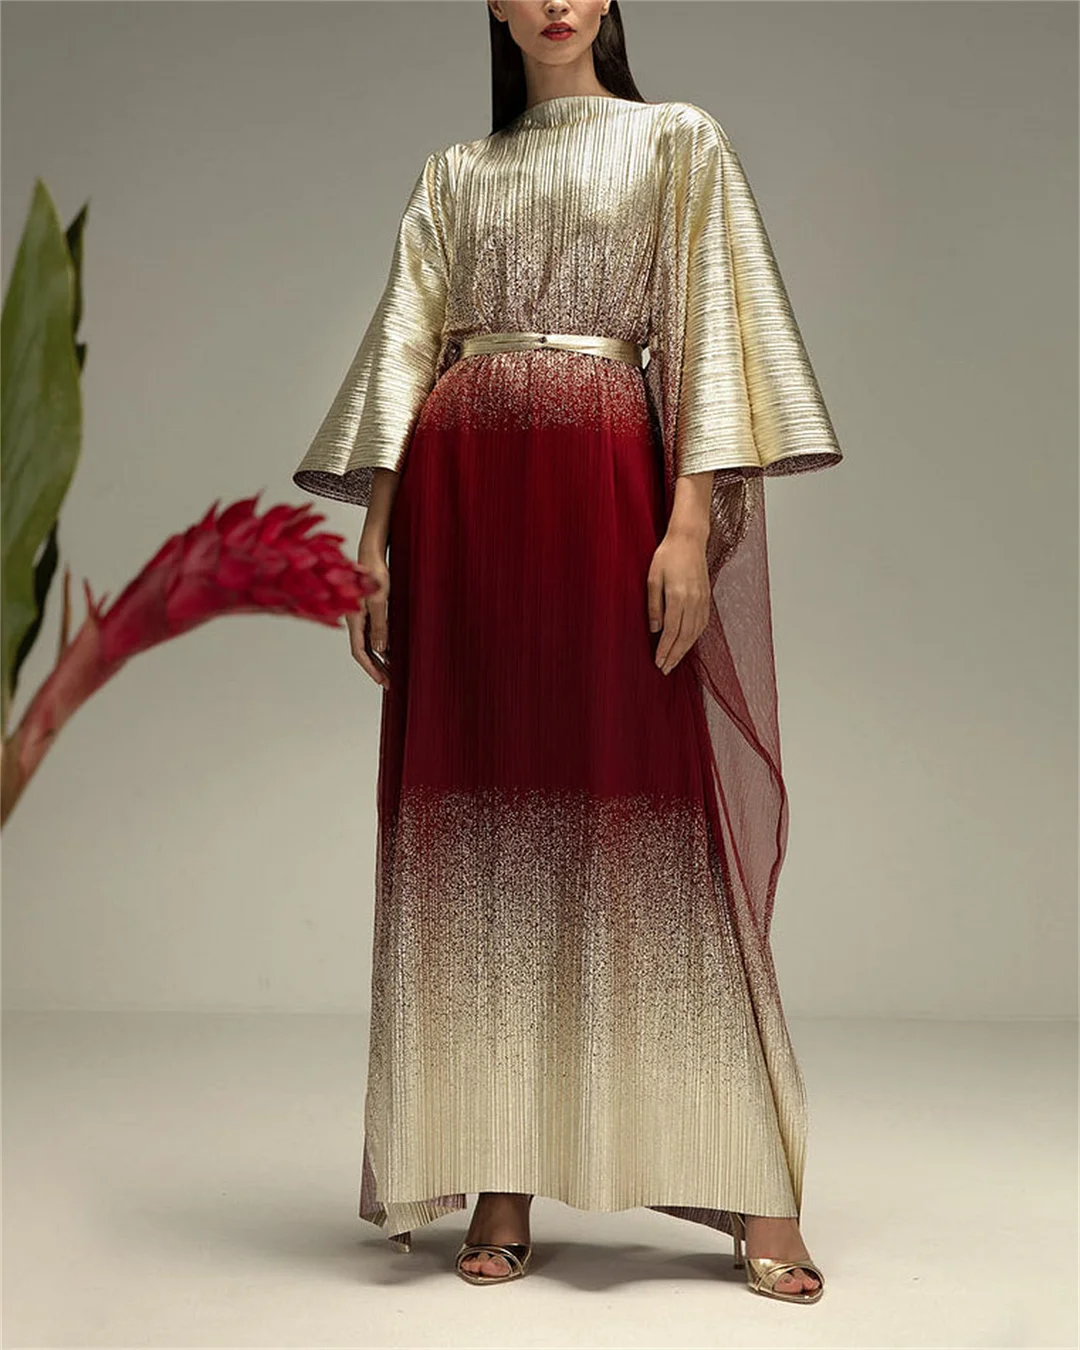 Women's gold sequin gown dress